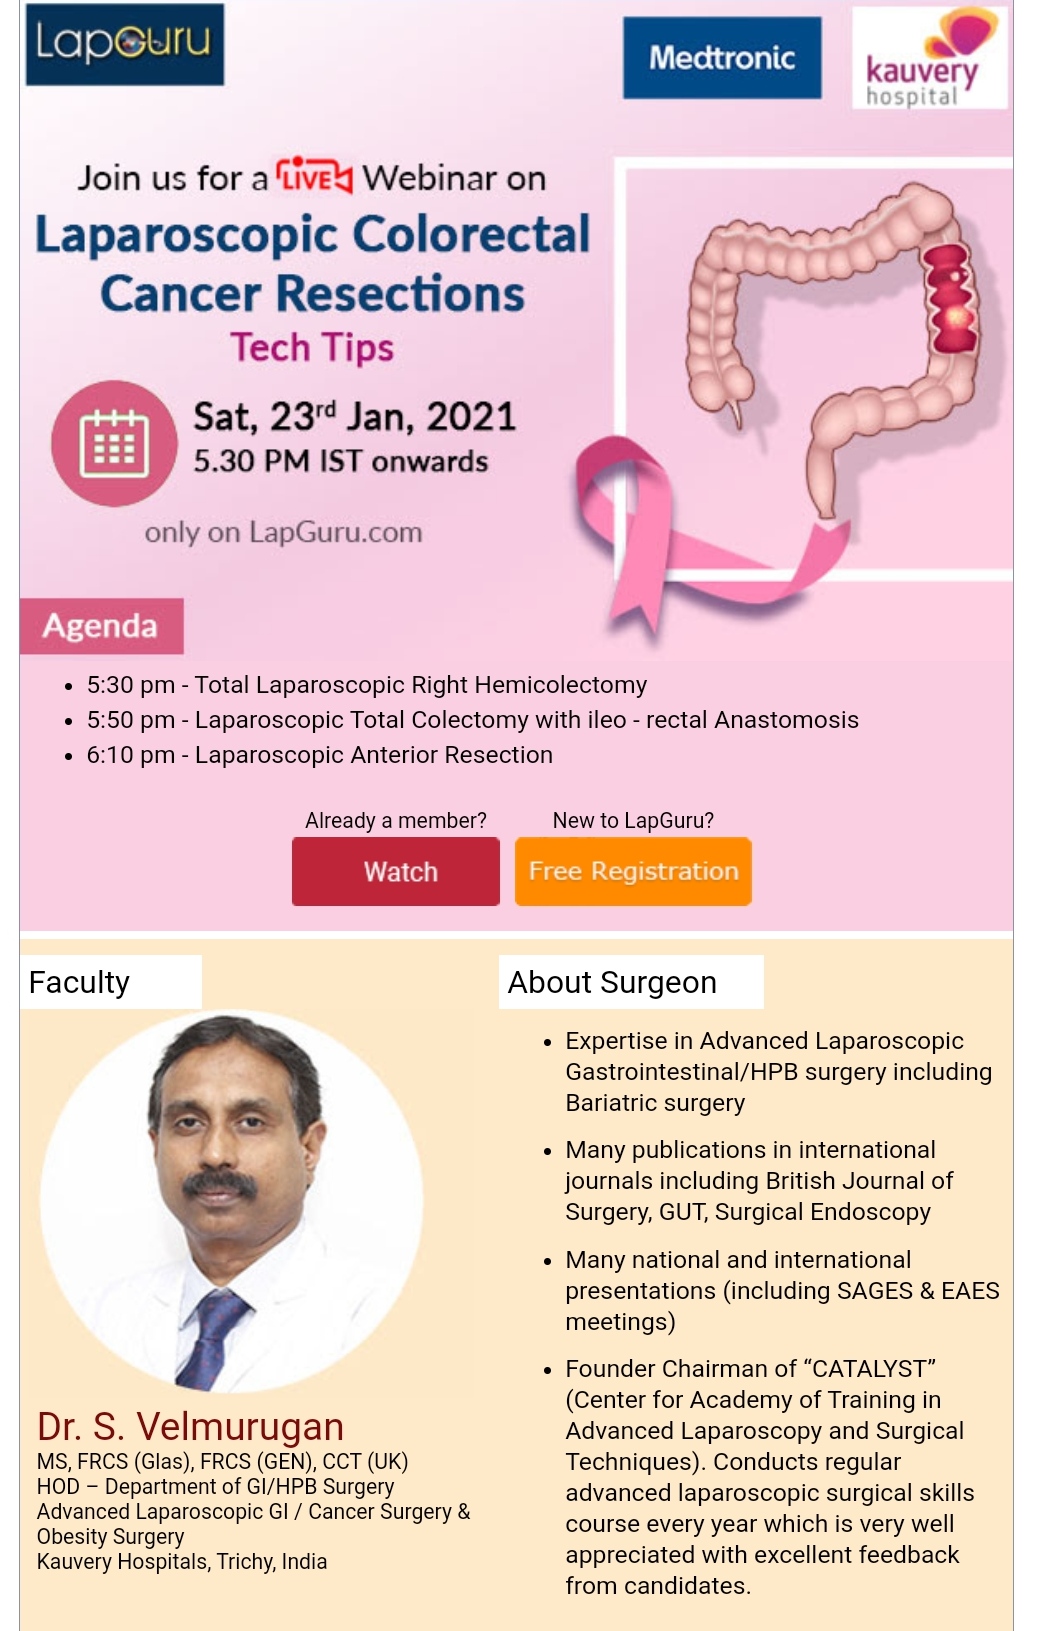 Advanced Laparoscopic Gastrointestinal/HPB surgery